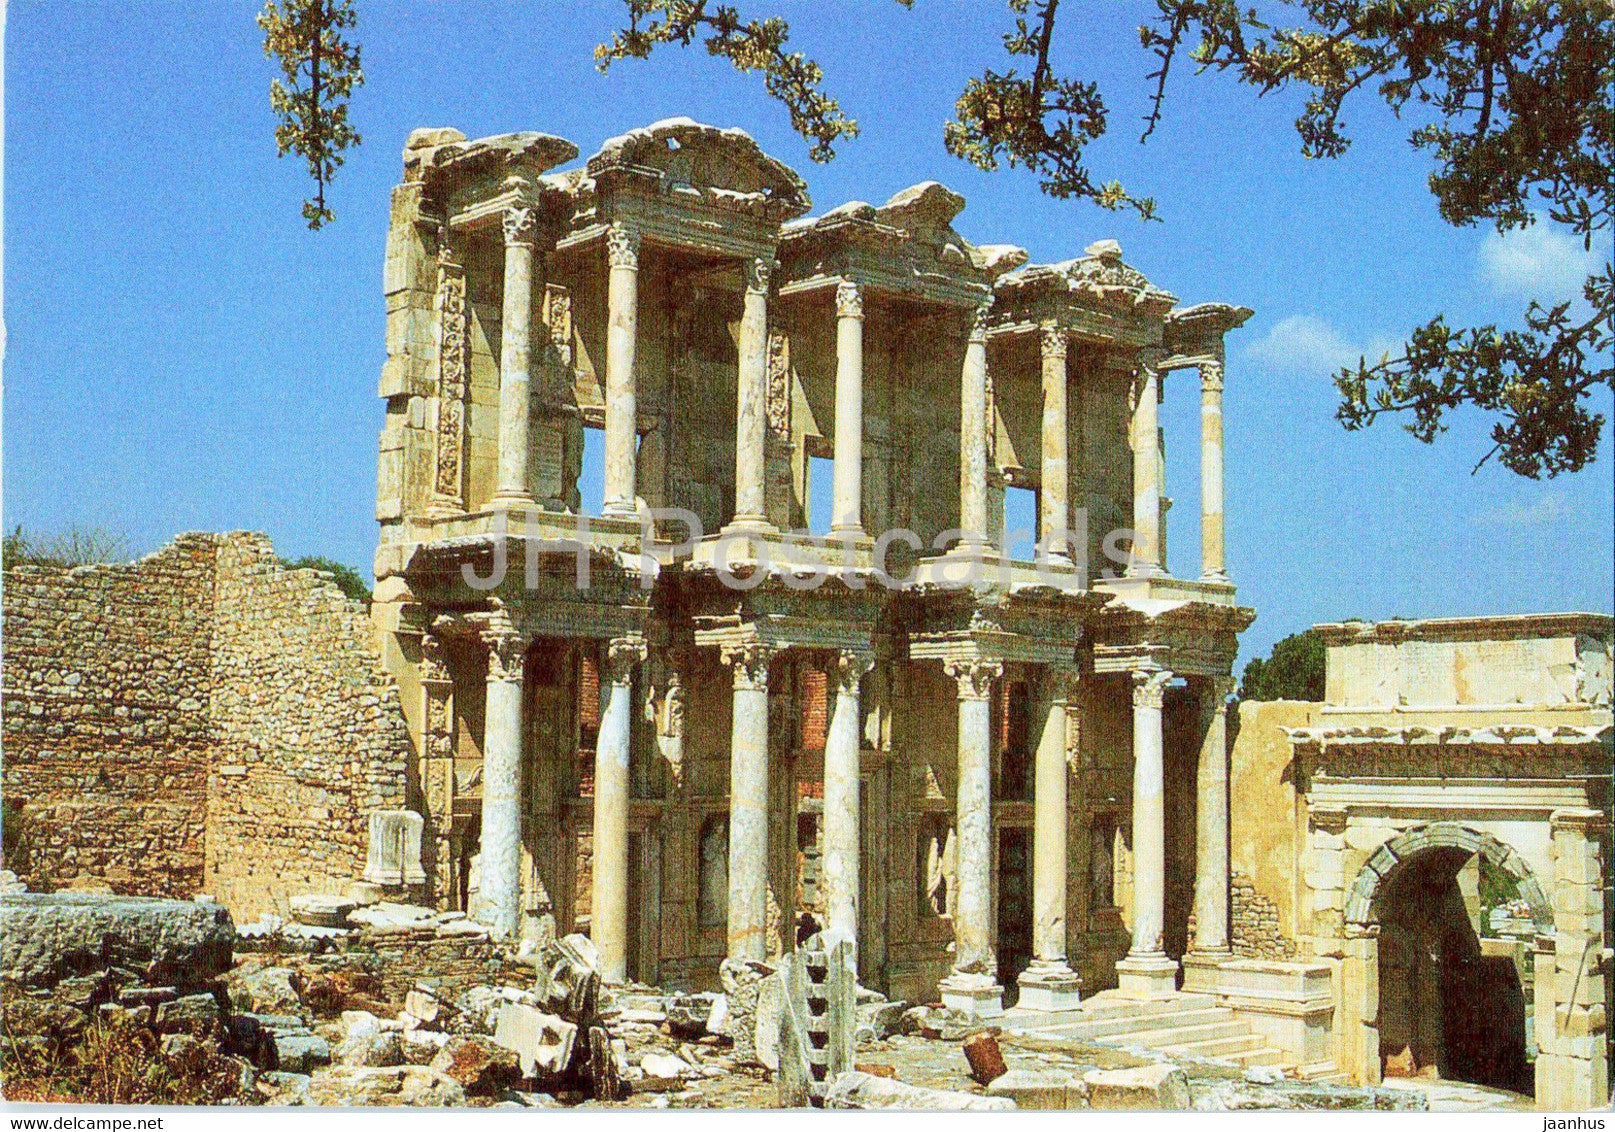 Efes - Ephesus - The Library of Celsus - ancient world - 35/522 - Keskin - Turkey - unused - JH Postcards